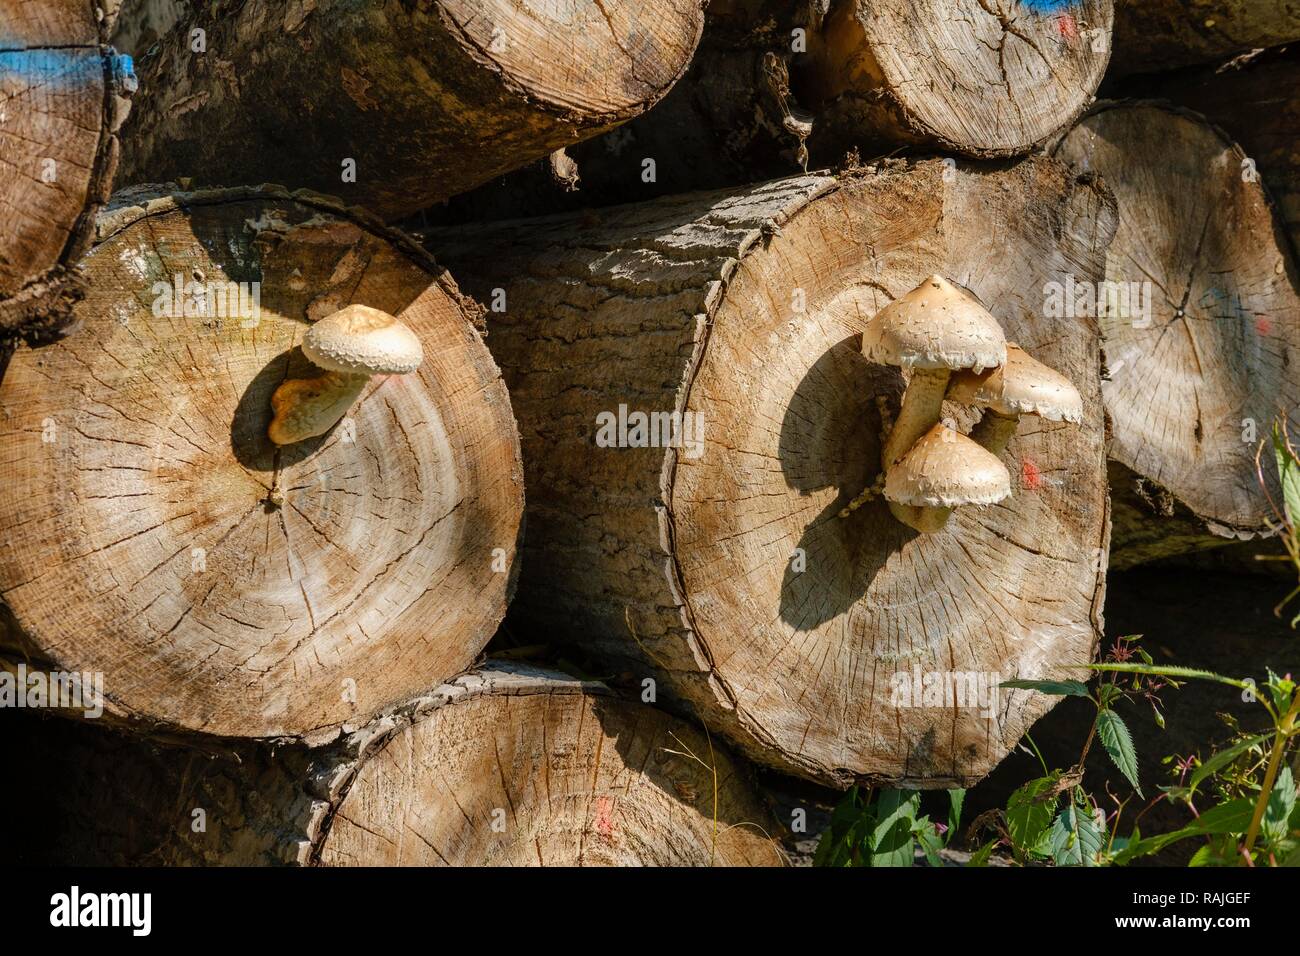 Pholiota populnea (Hemipholiota populnea) on cut tree trunks of poplar, Upper Bavaria, Bavaria, Germany Stock Photo